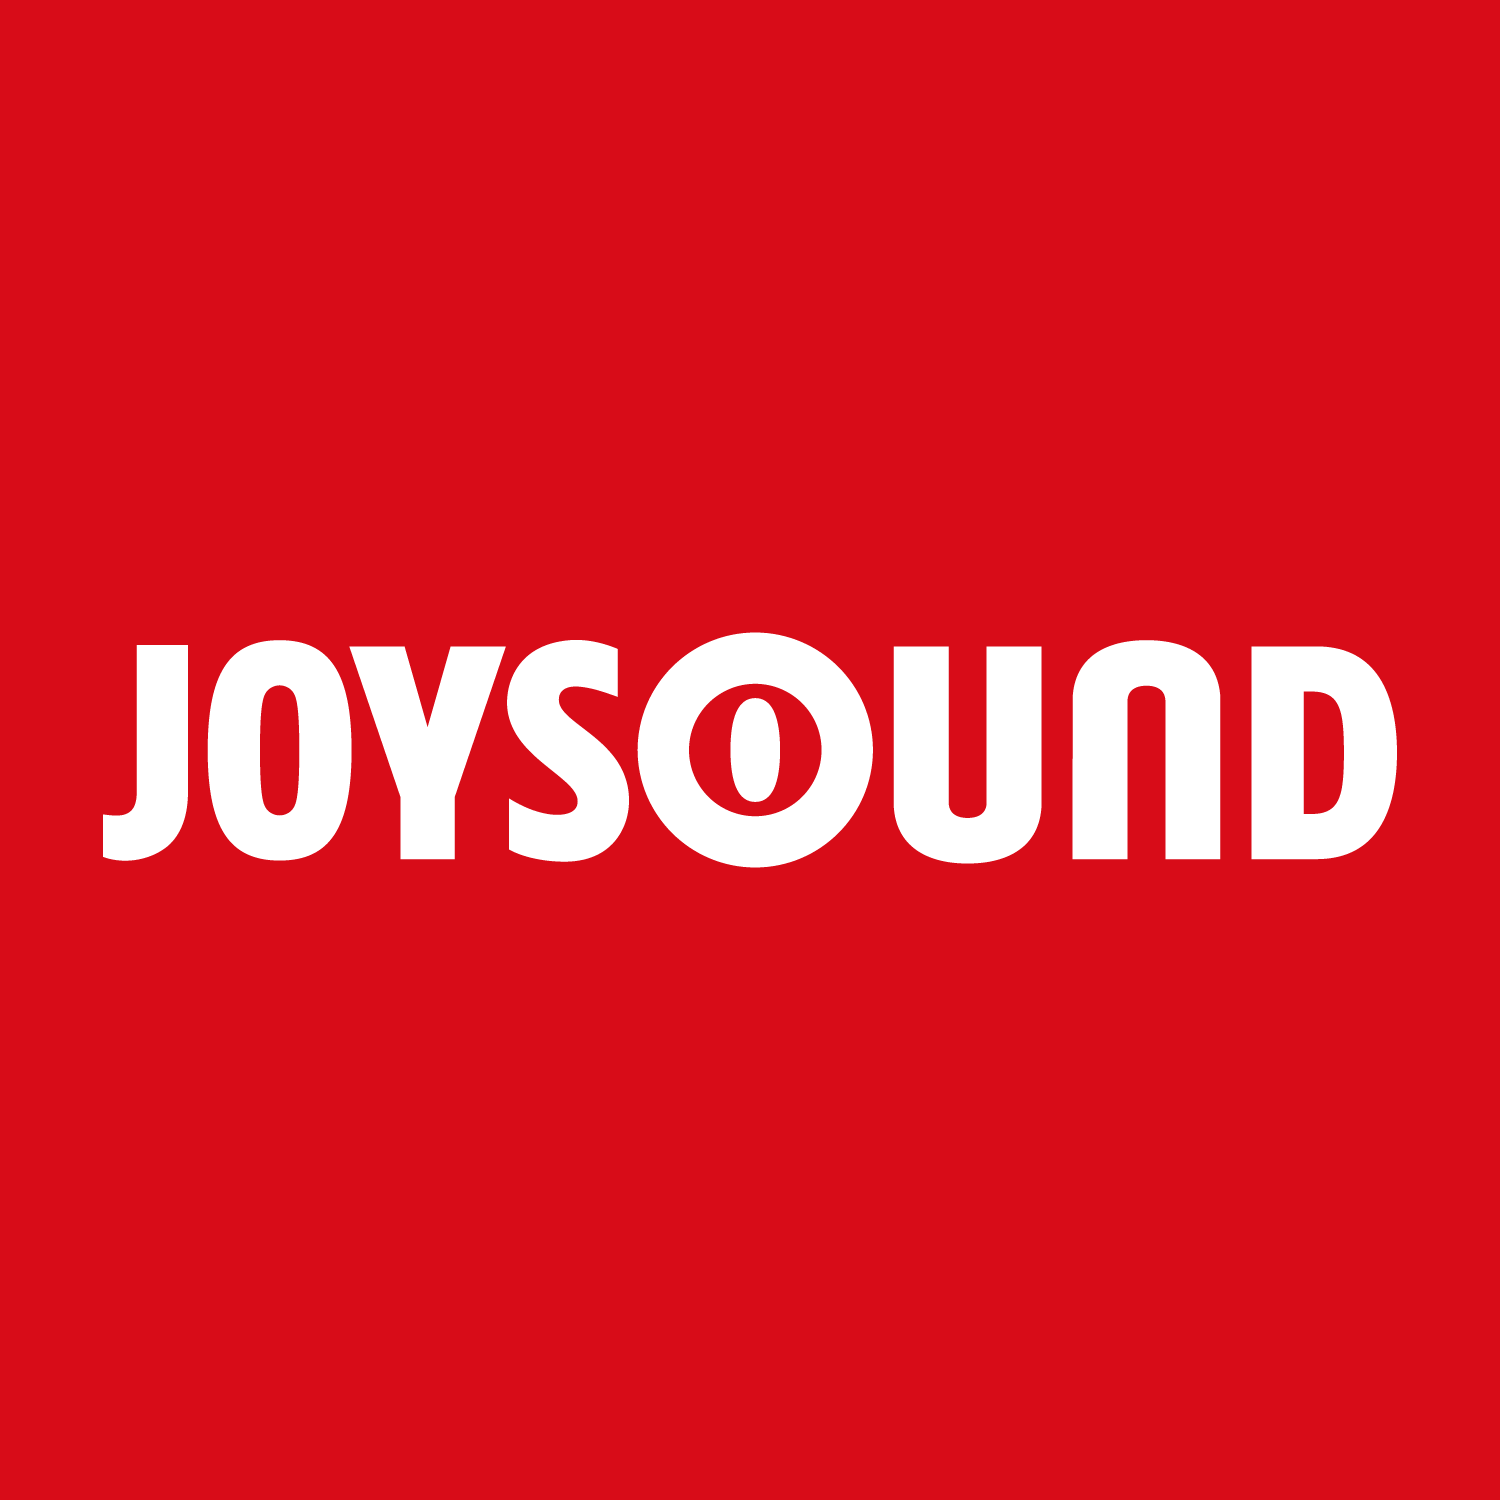 joysoundの紹介画像